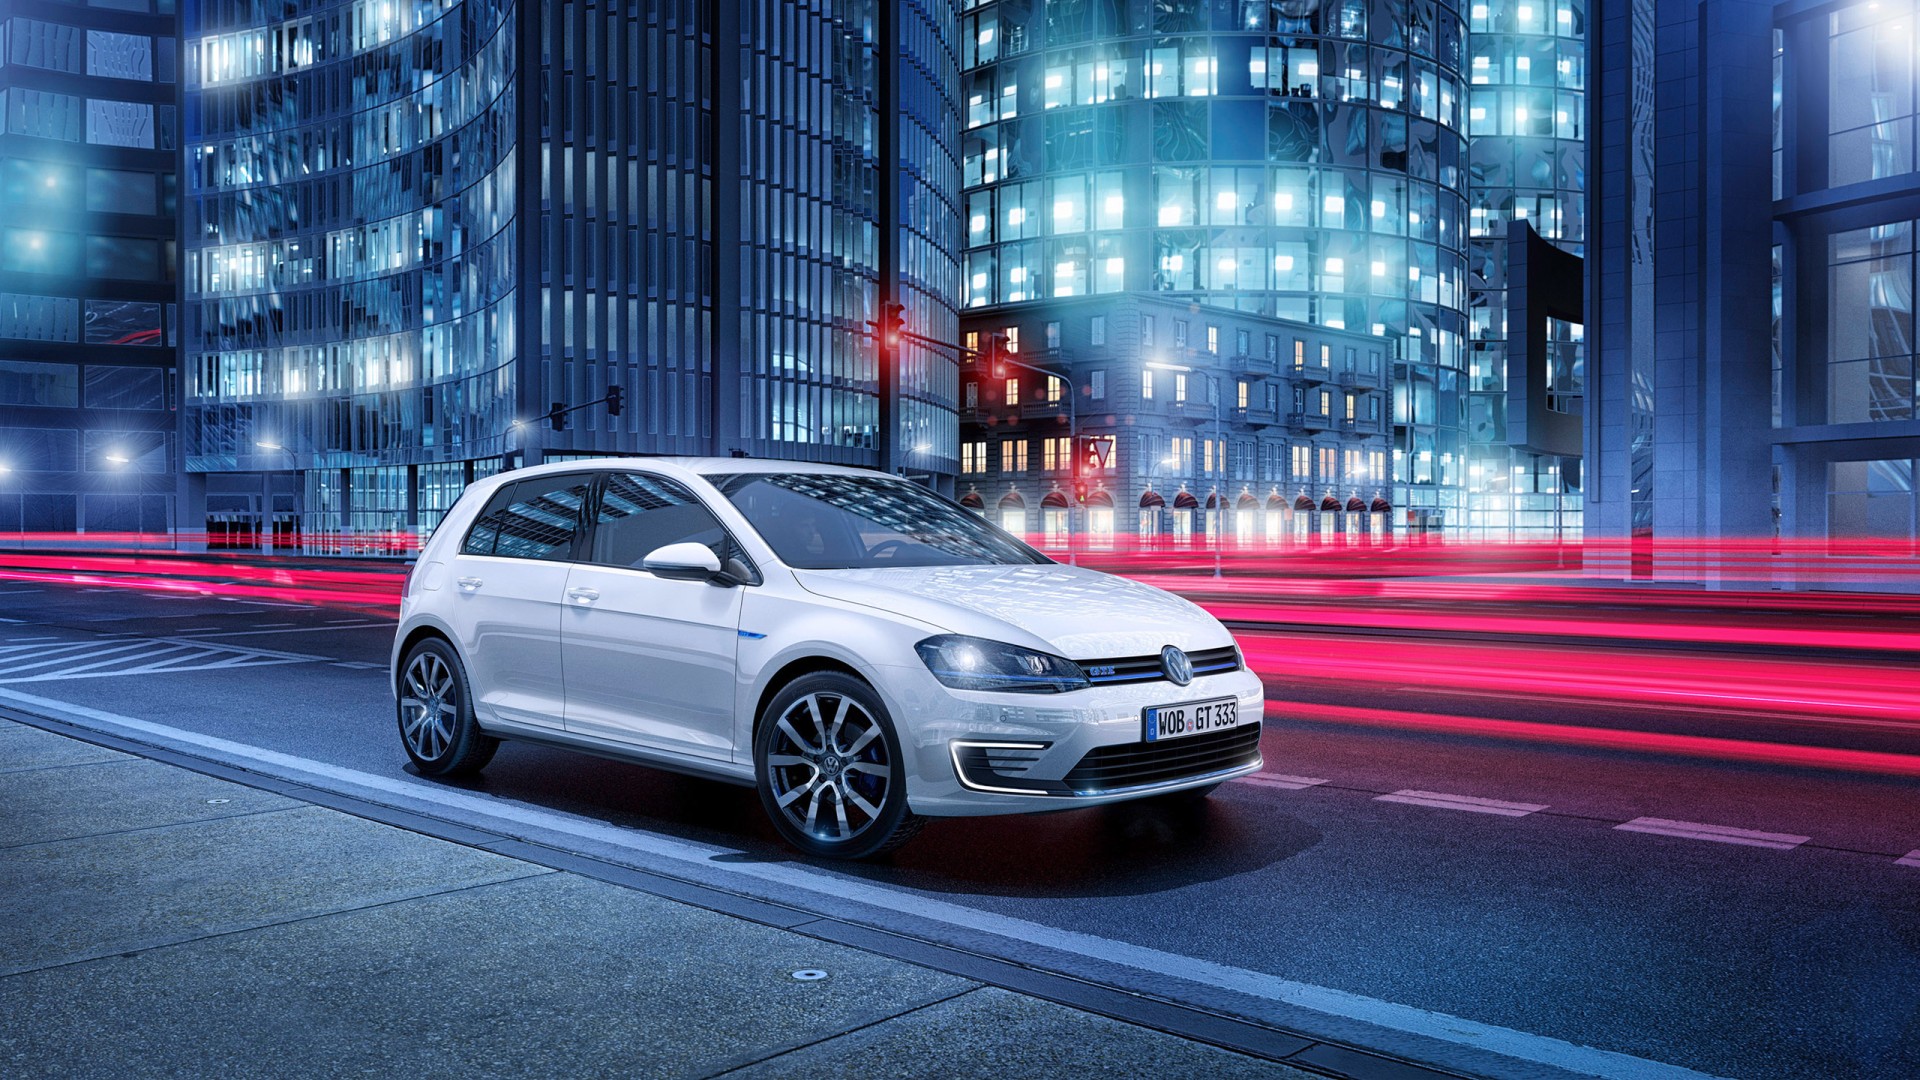 2014 Volkswagen Golf GTE Plug in Hybrid Wallpaper | HD Car ...